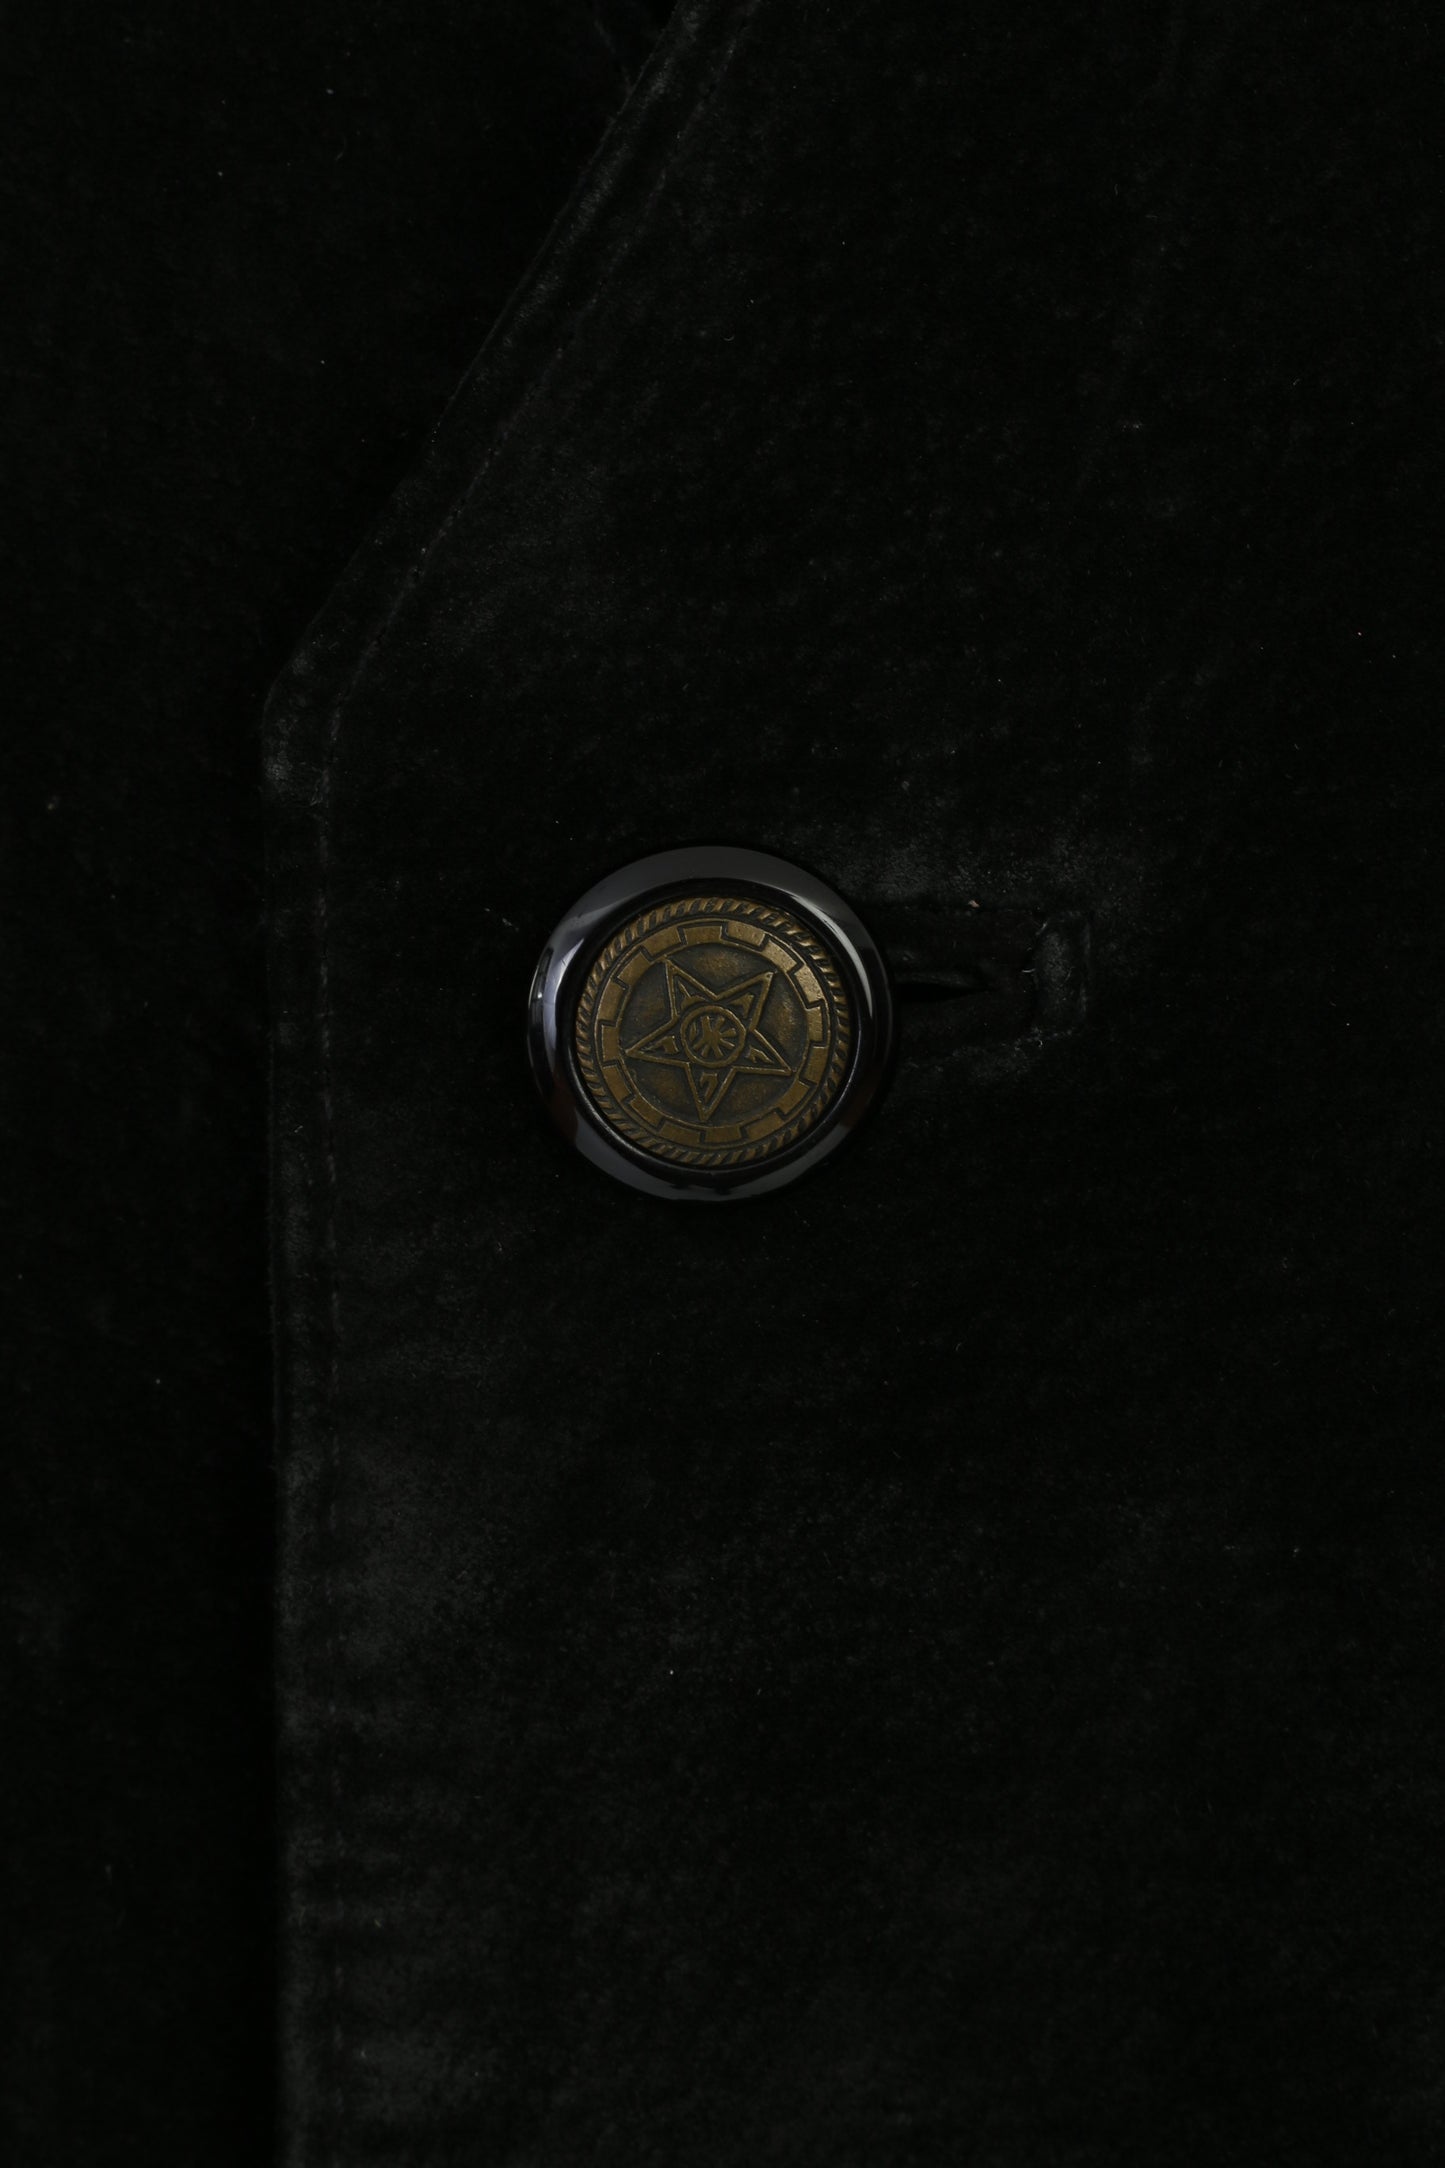 C.Comberti Men 58 XXL Leather Vest Black Vintage Western Bottoms Pockets Classic Top